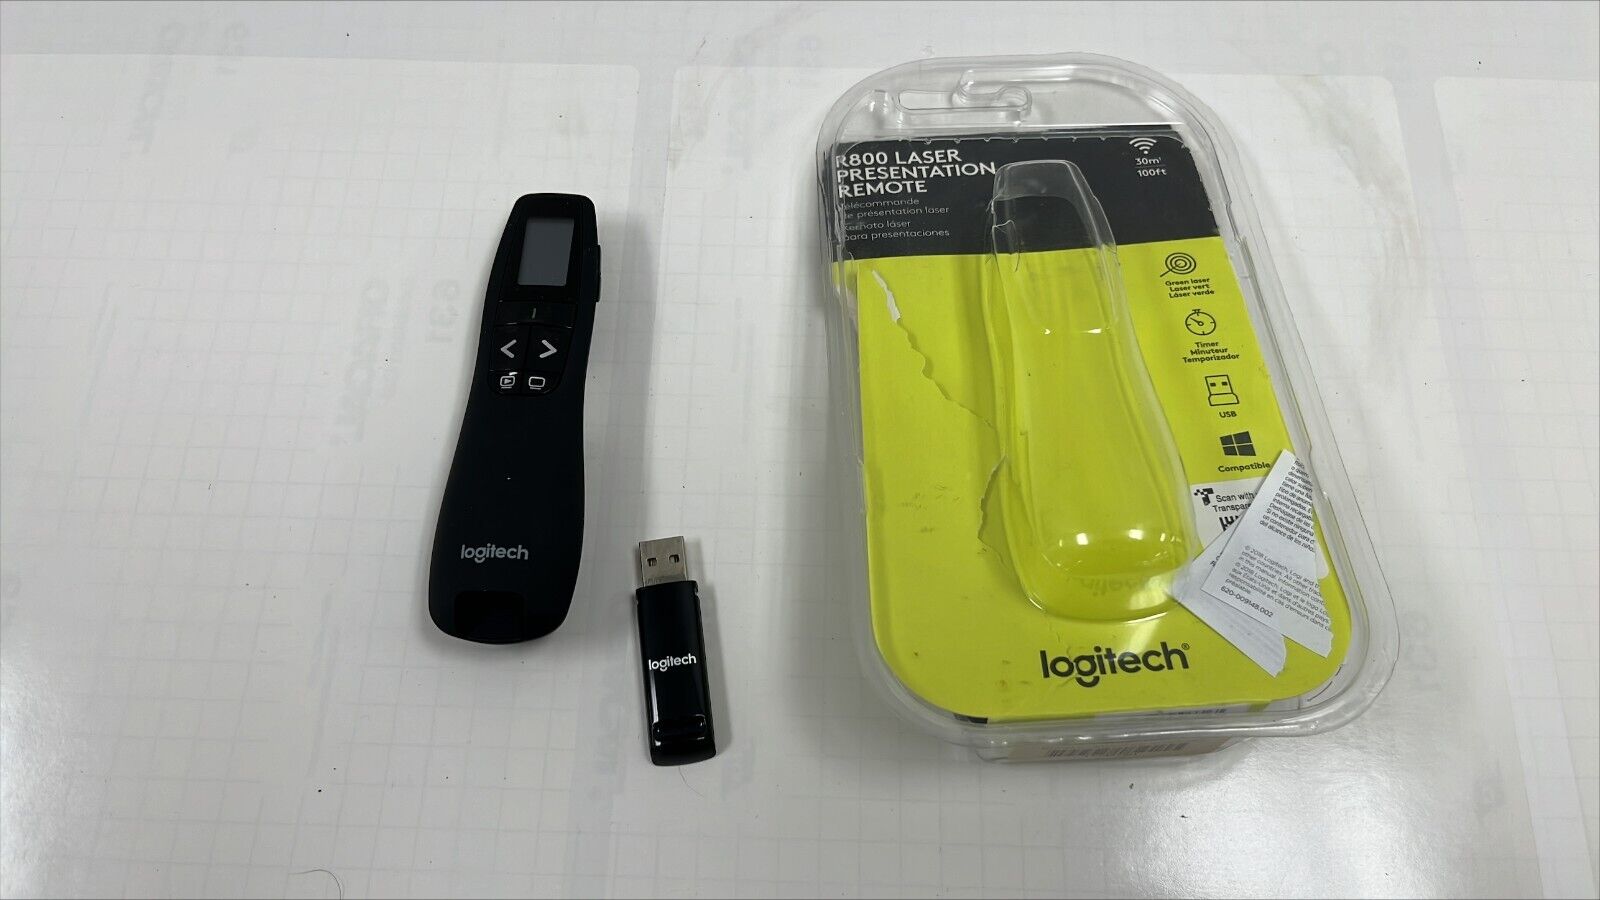 Logitech R800 Laser Presentation Remote Control Black 910-001350